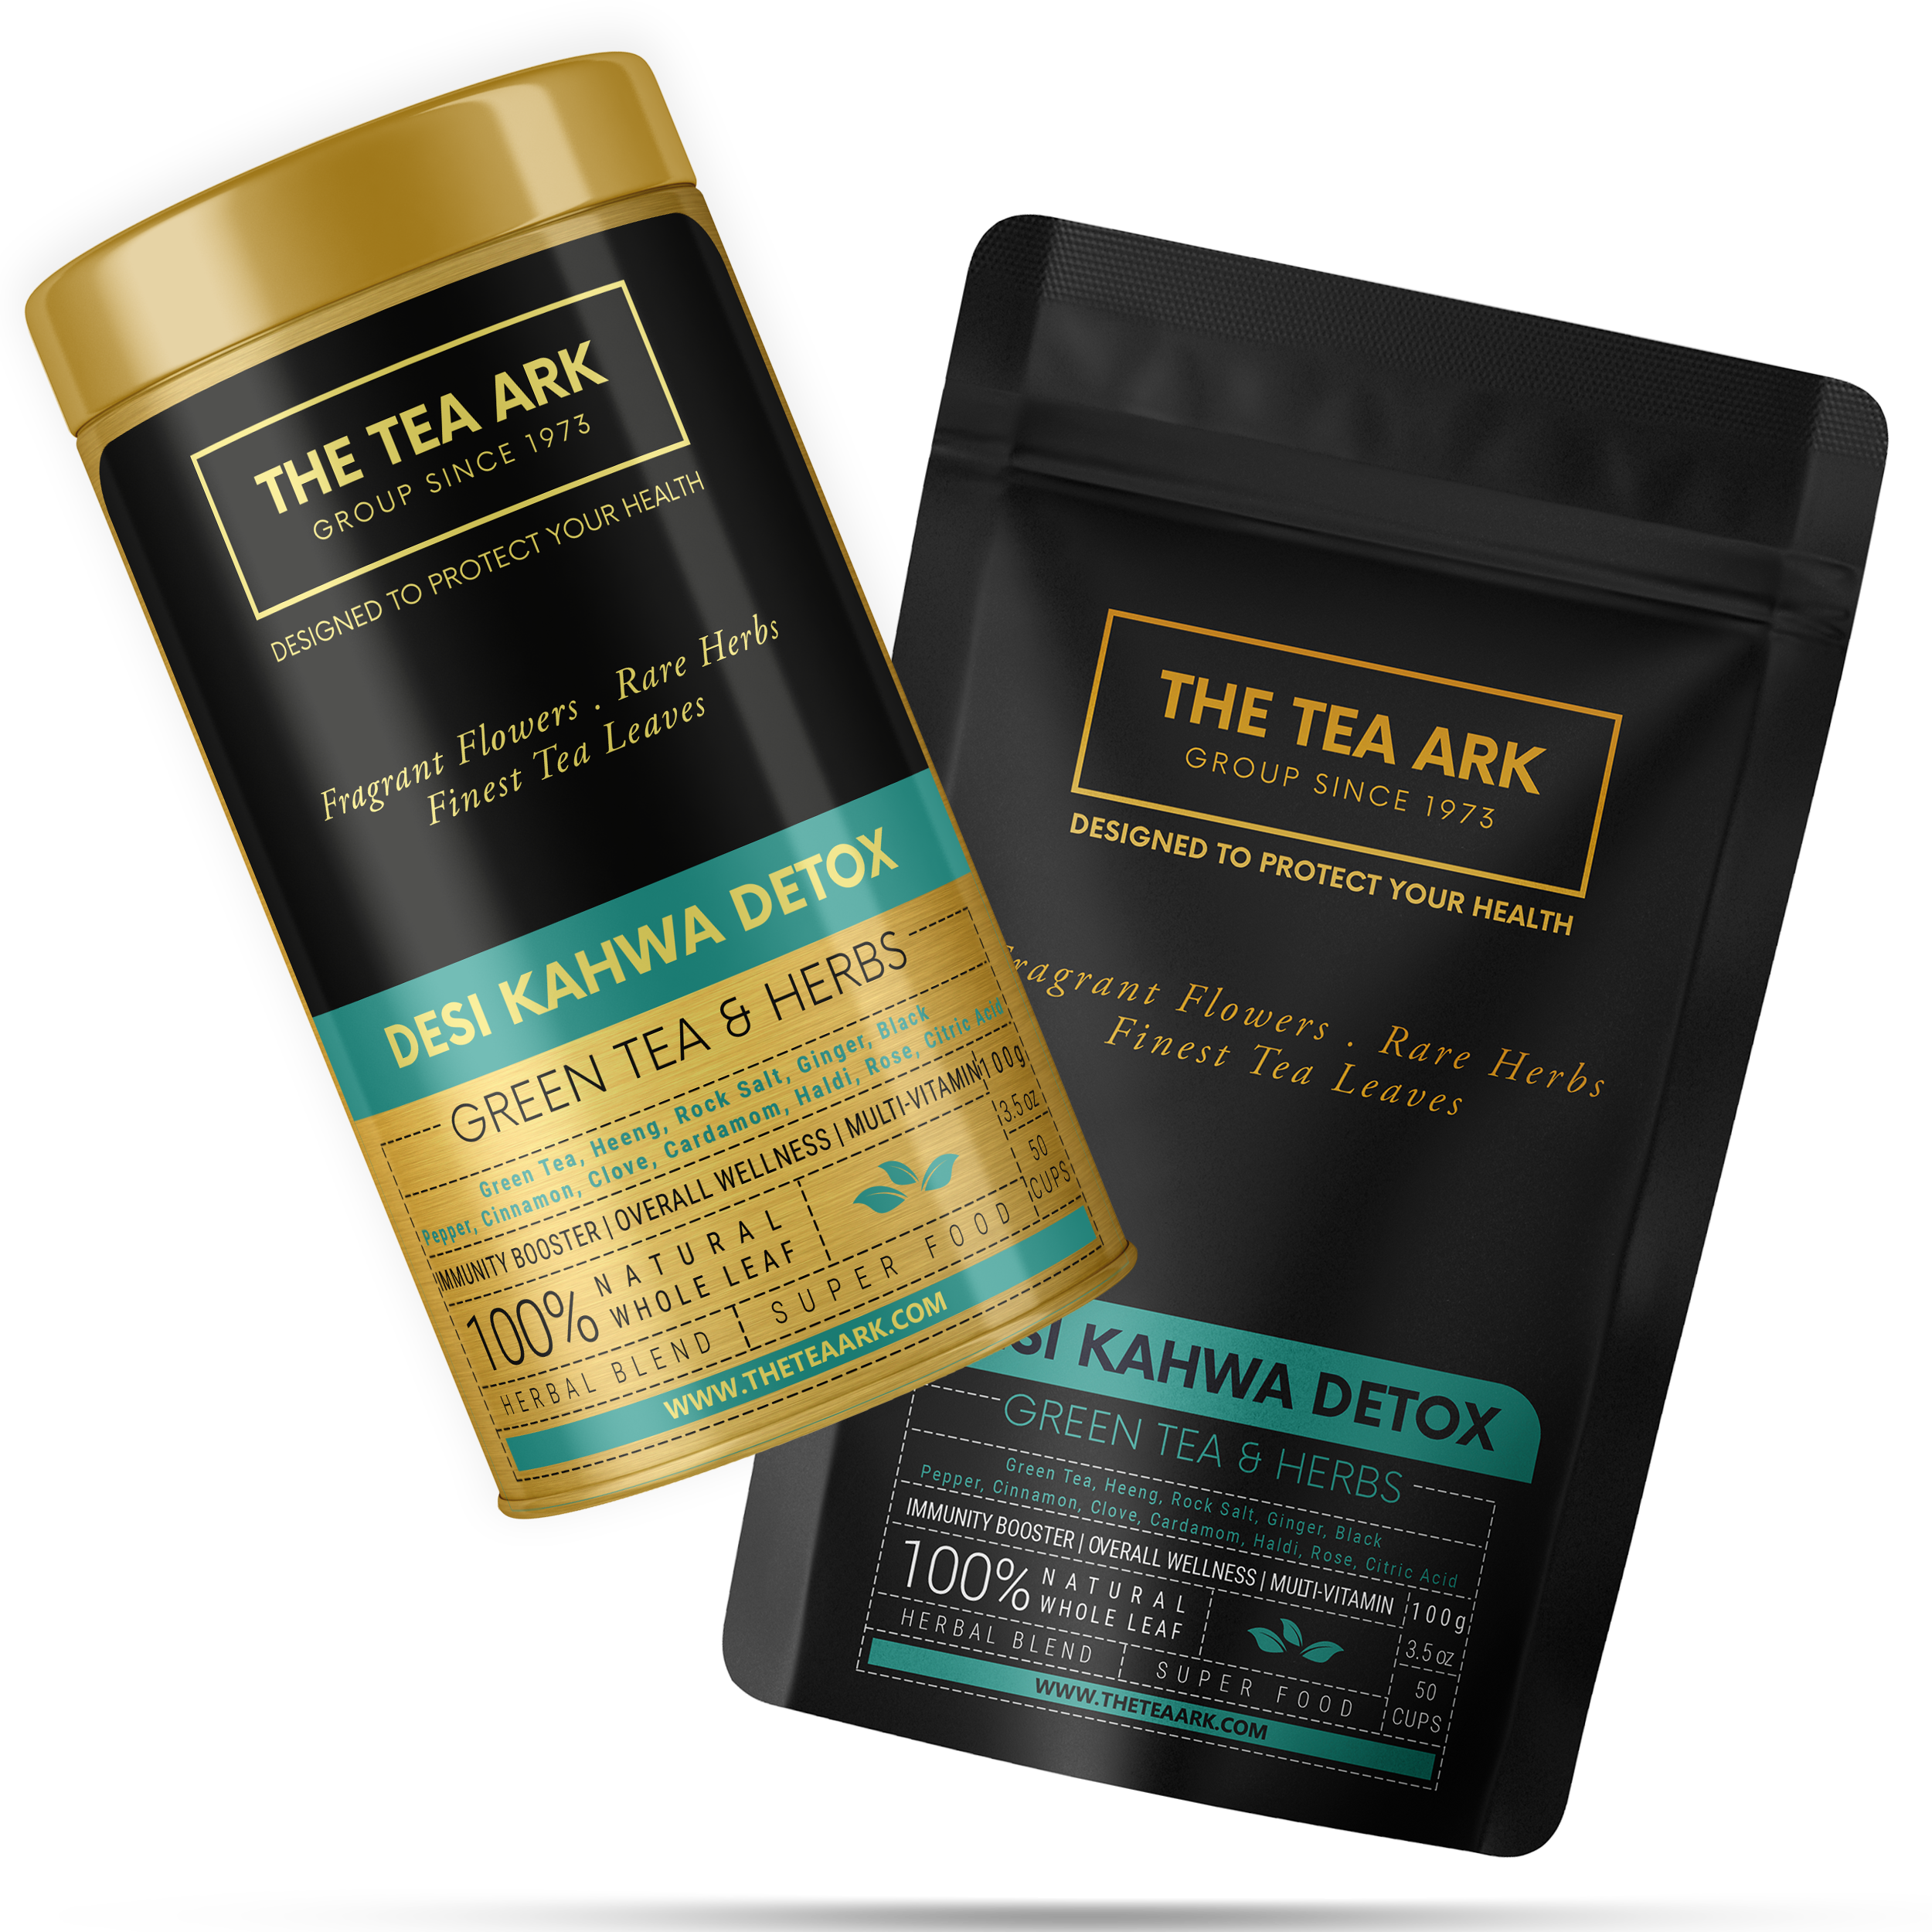 The Tea Ark Detox Desi Kahwa Green Tea (50 Cups), 100g